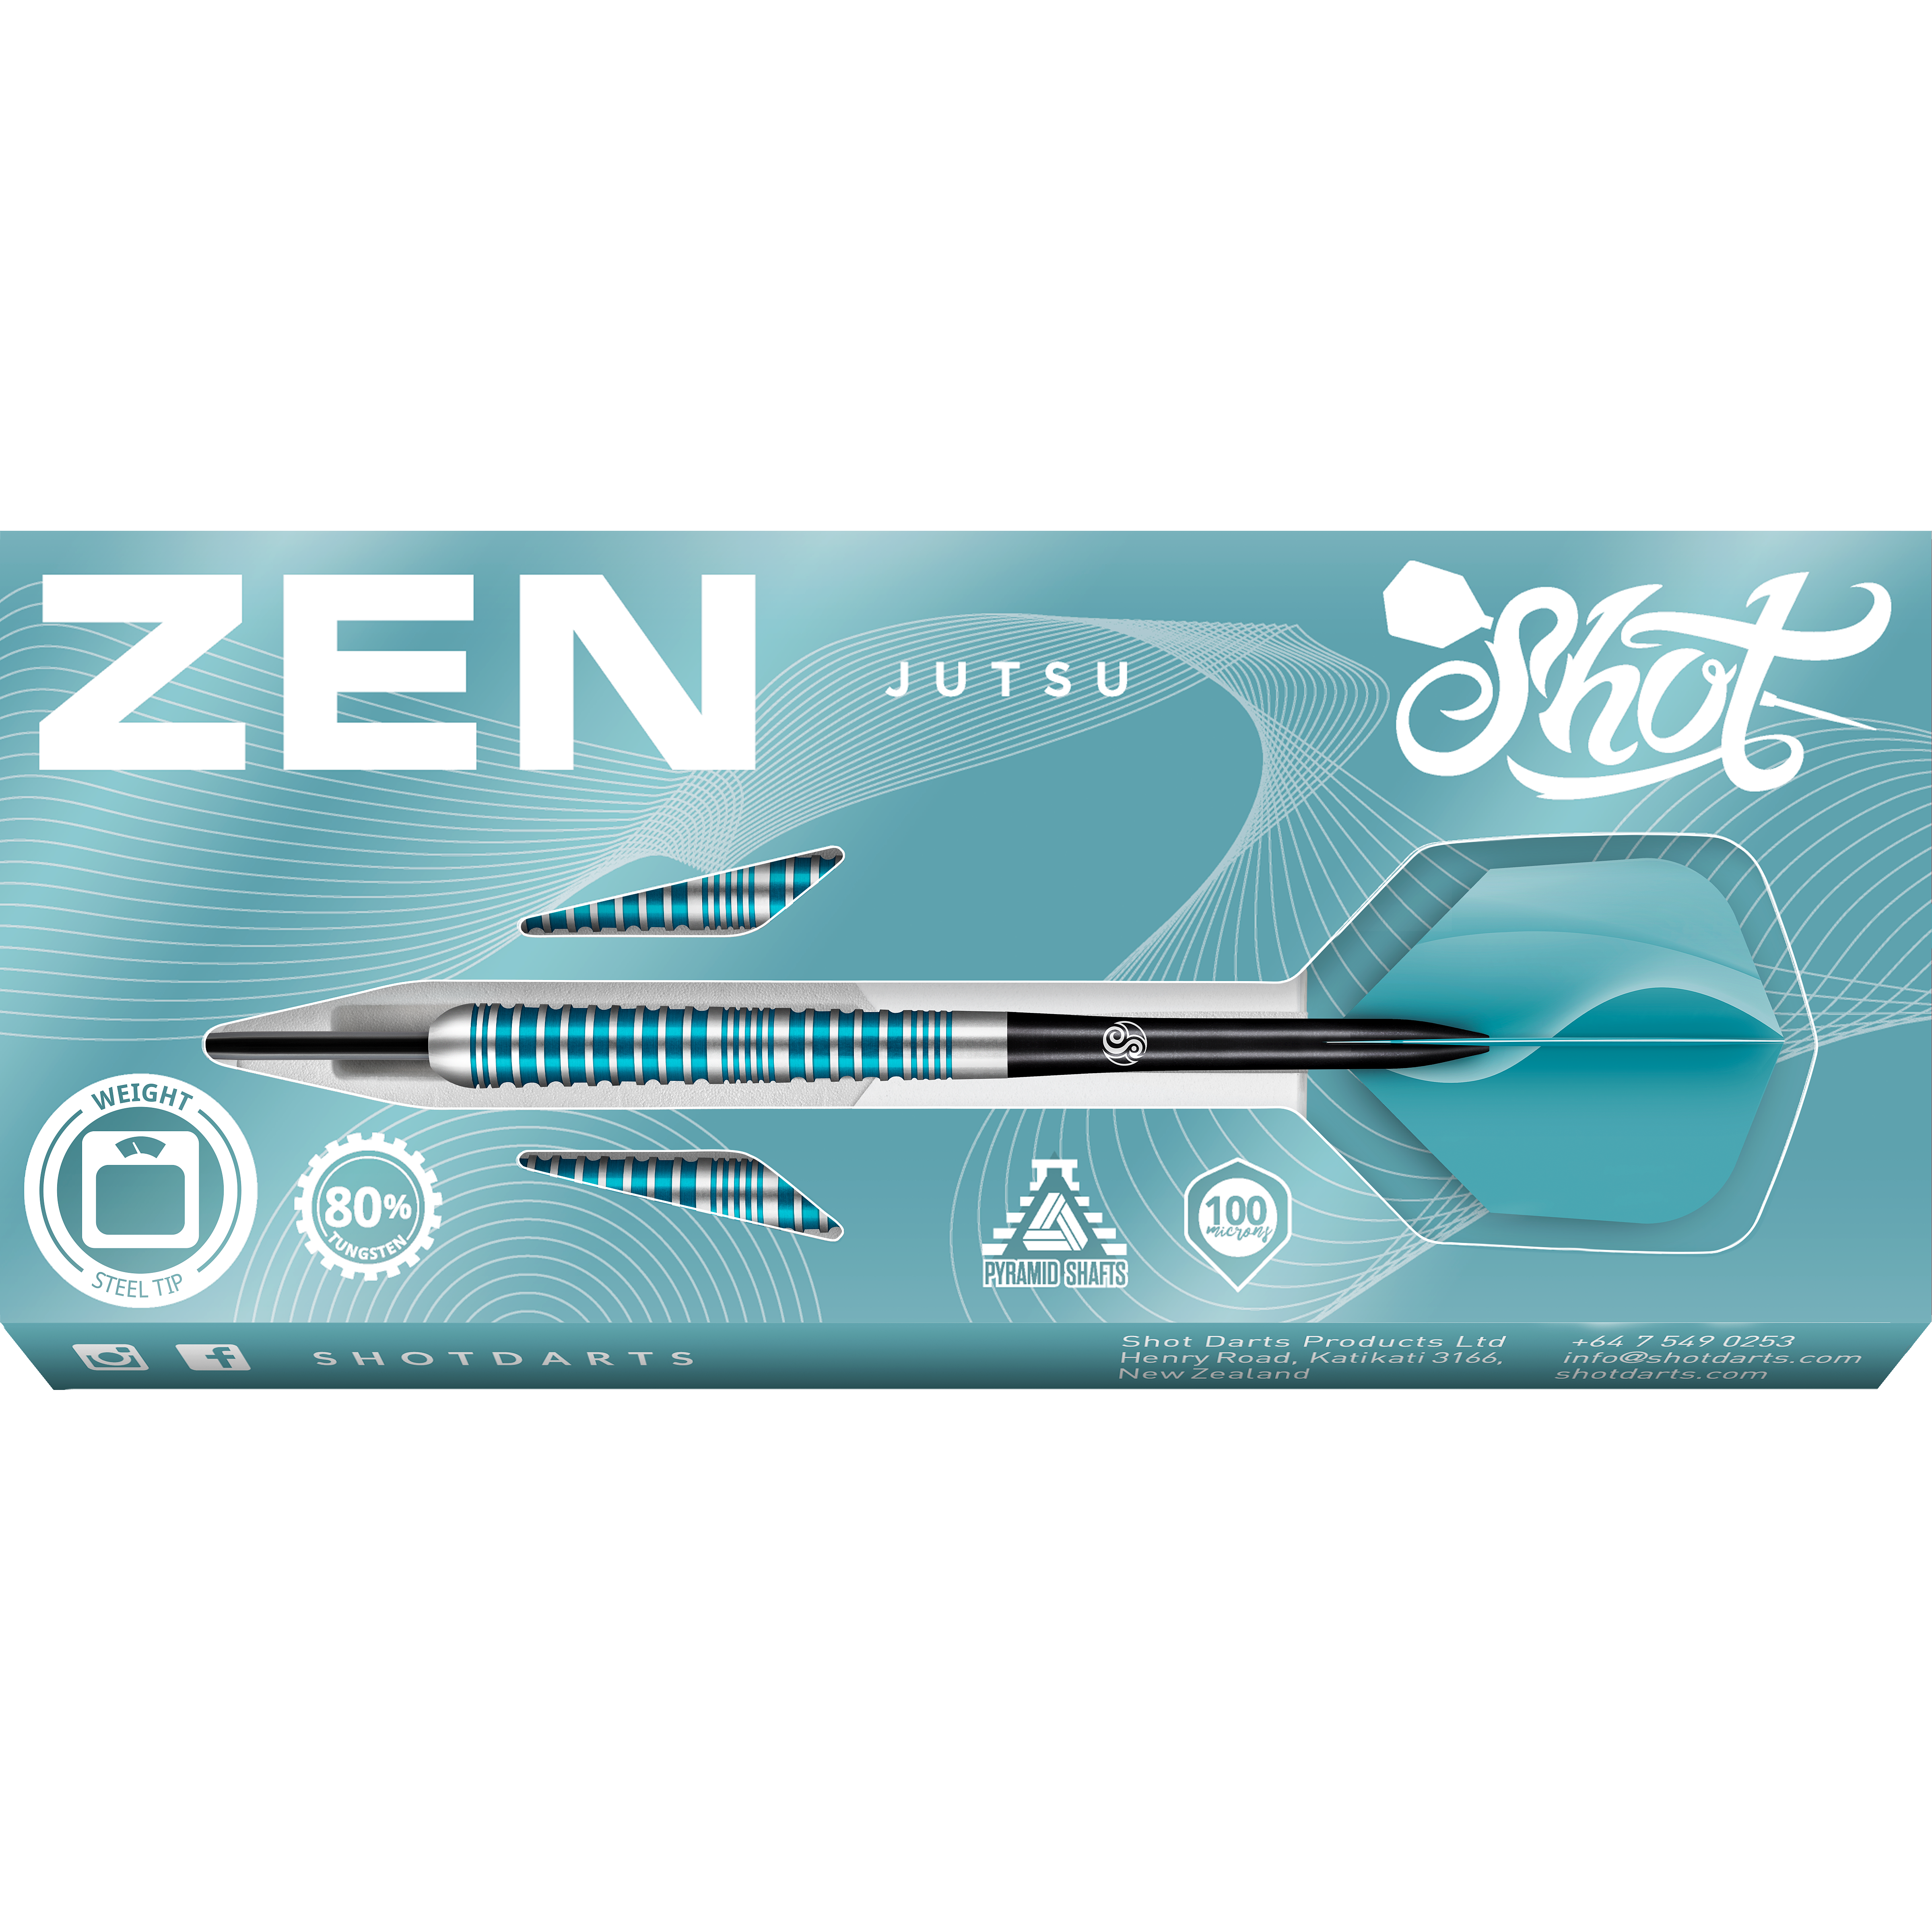 Shot! - Zen Jutsu 2.0 - Steeldart